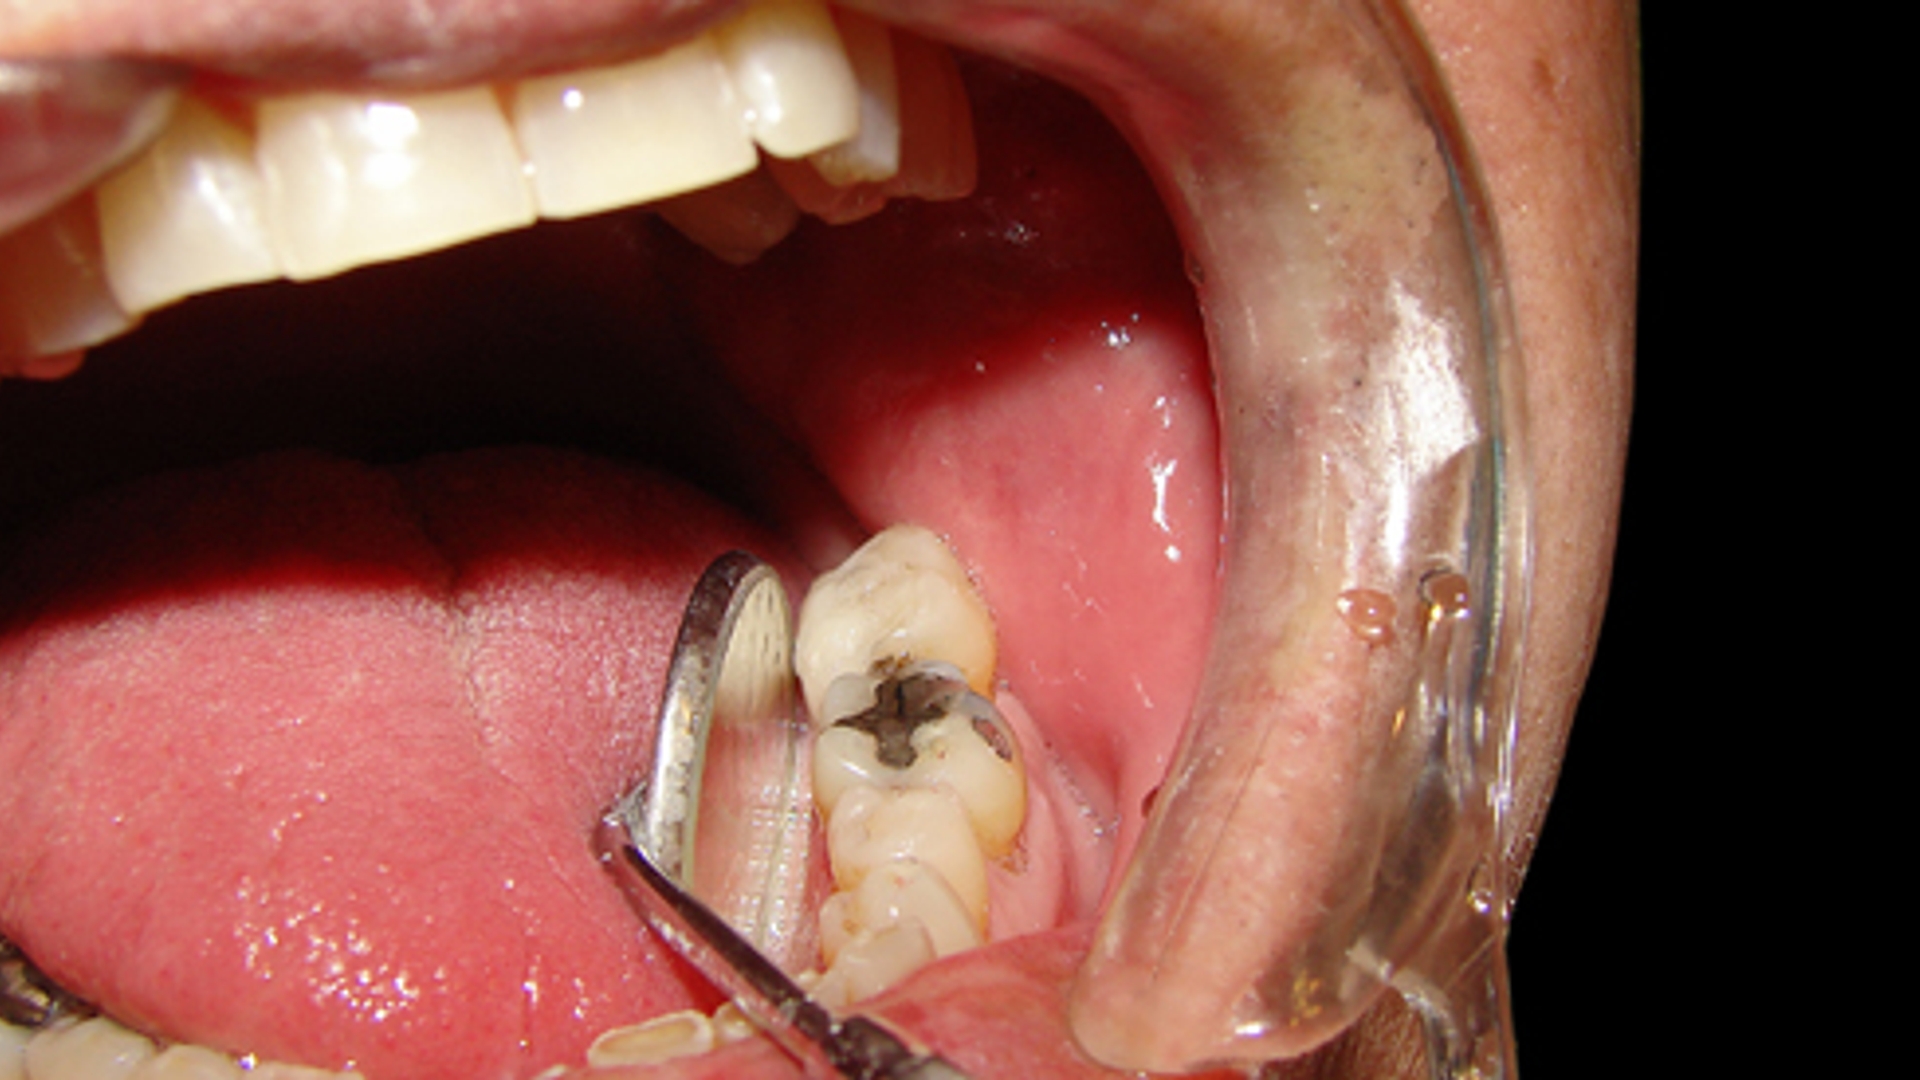 tandartsbehandeling_01.jpg